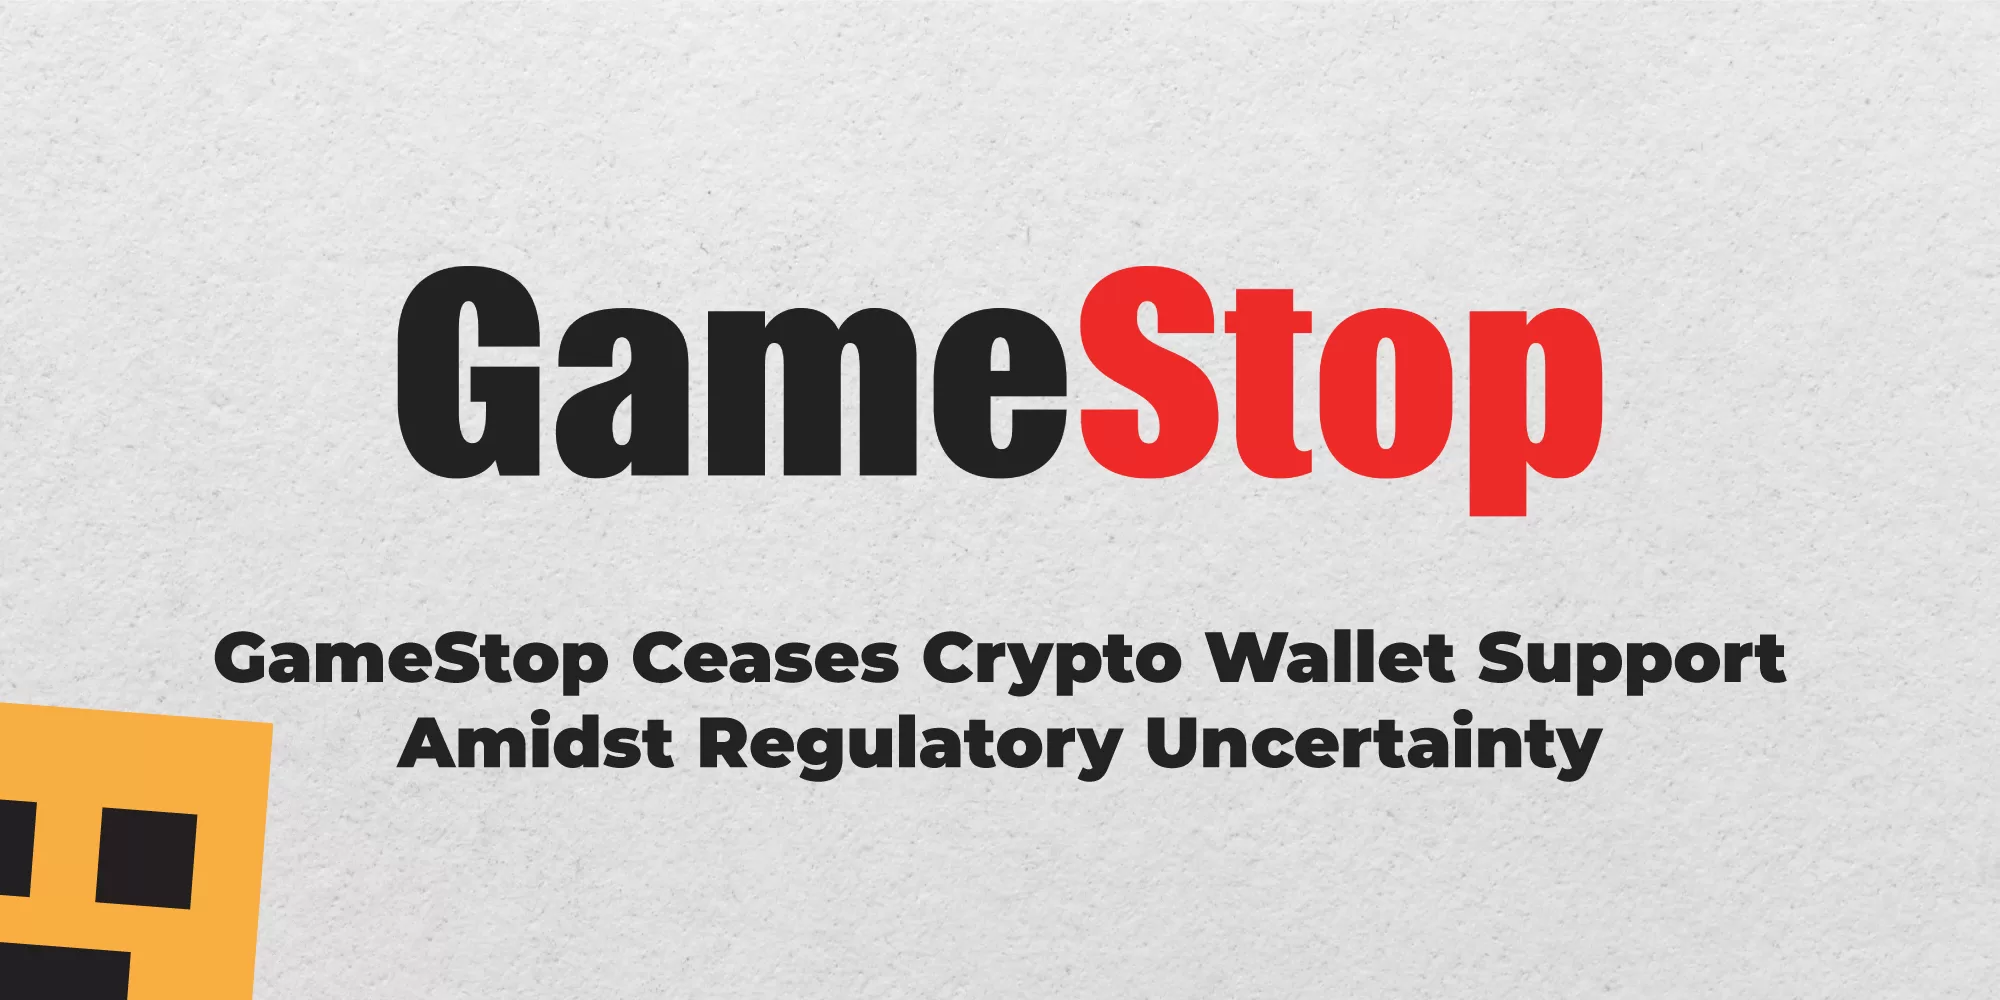 GameStop Ceases Crypto Wallet Support Amidst Regulatory Uncertainty